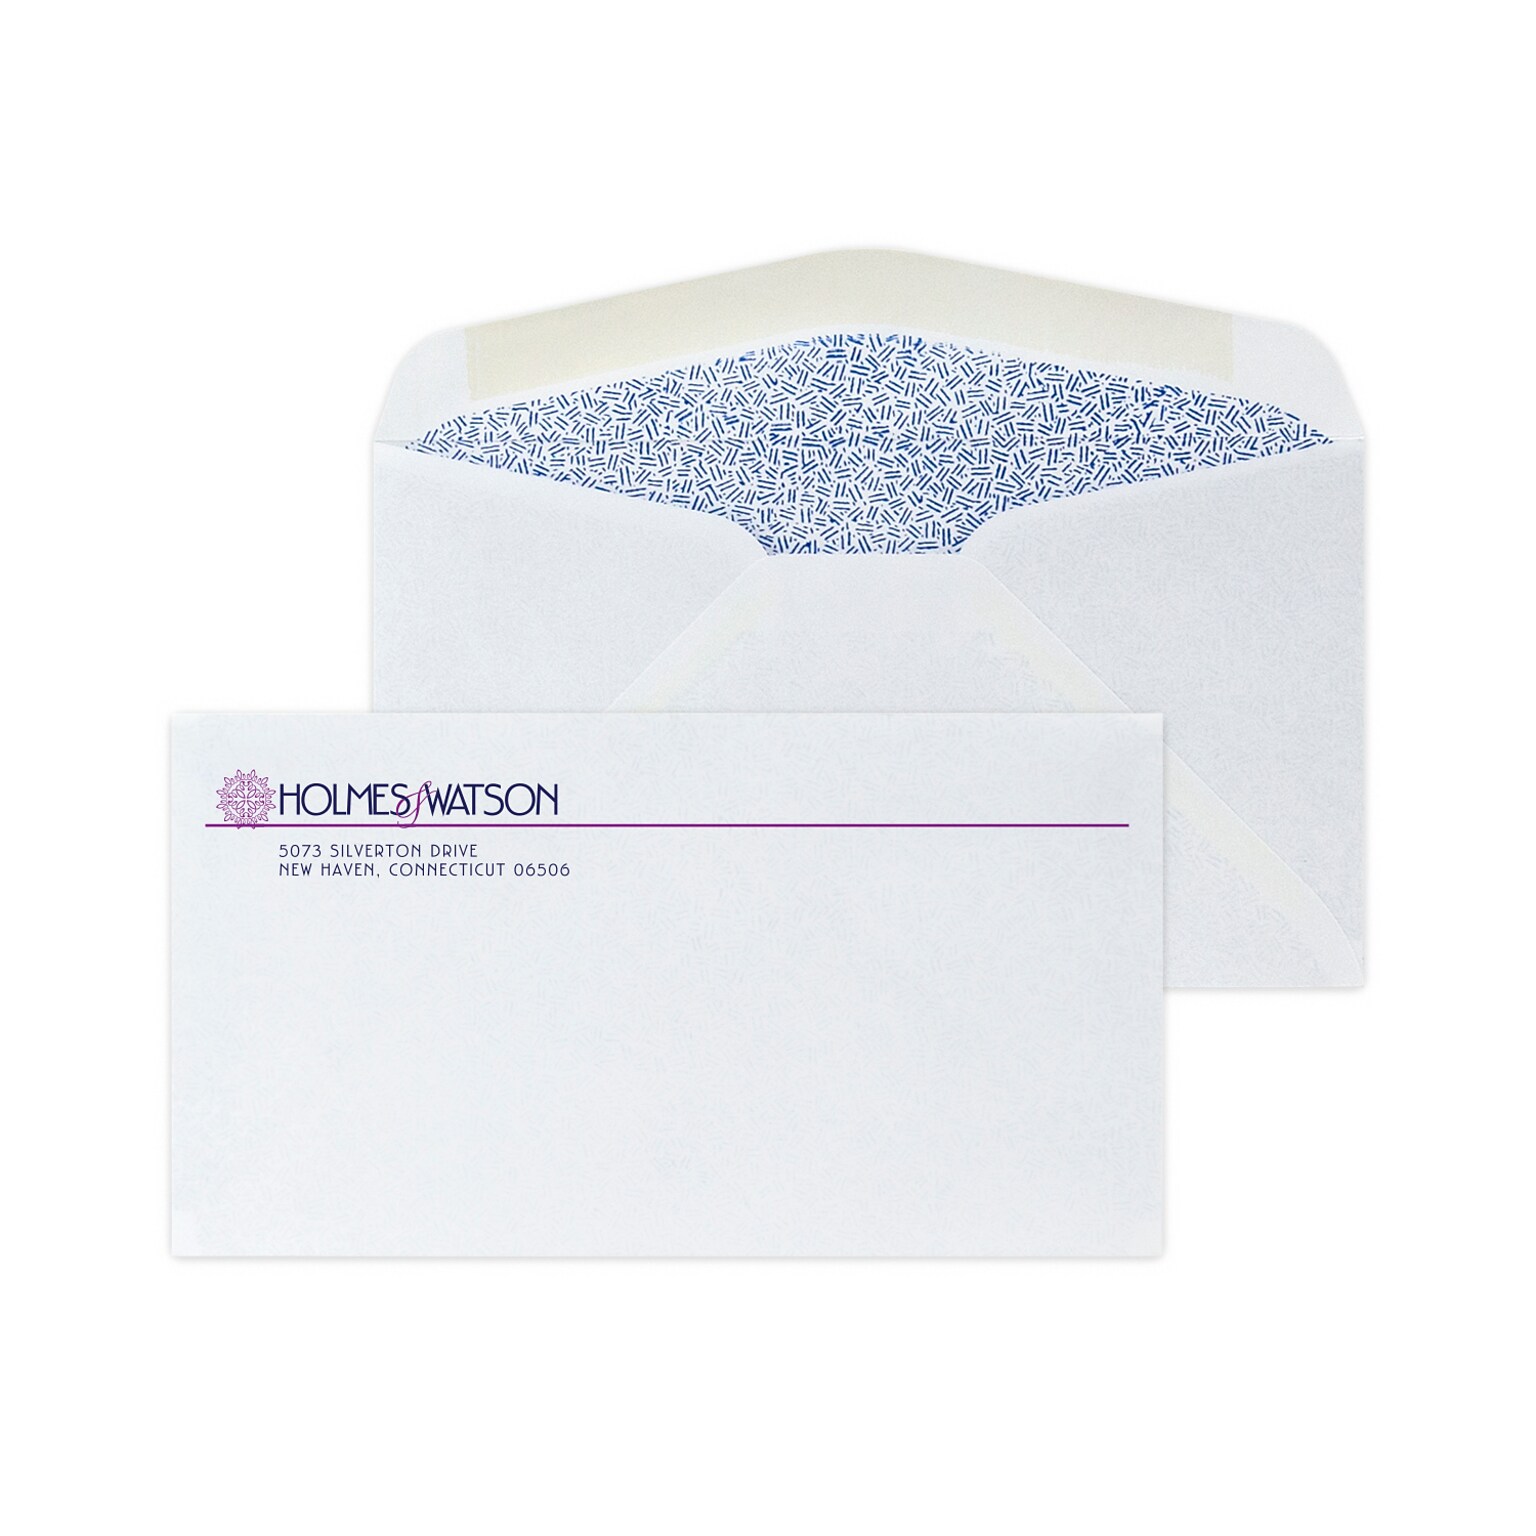 Custom #6-3/4 Diagonal Seam Standard Envelopes with Security Tint, 3 5/8 x 6 1/2, 24# White Wove, 2 Custom Inks, 250 / Pack